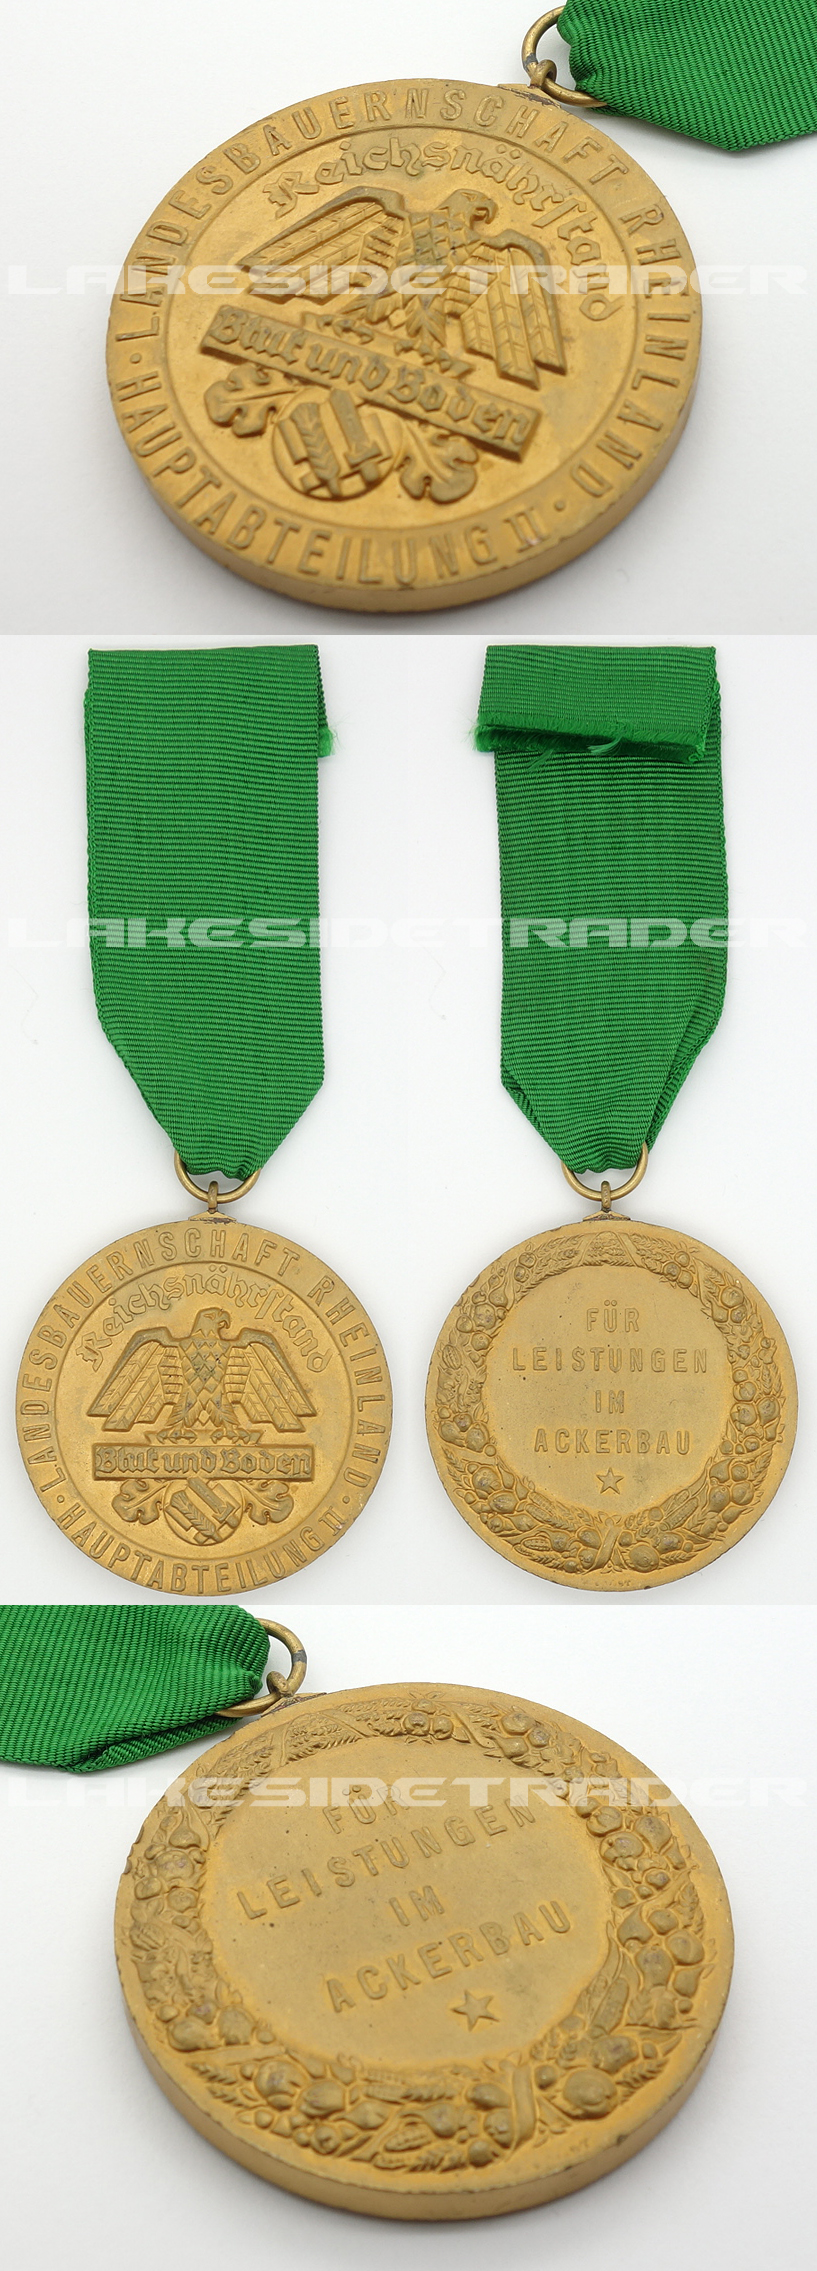 Blut und Boden - Agriculture Services Merit Medal